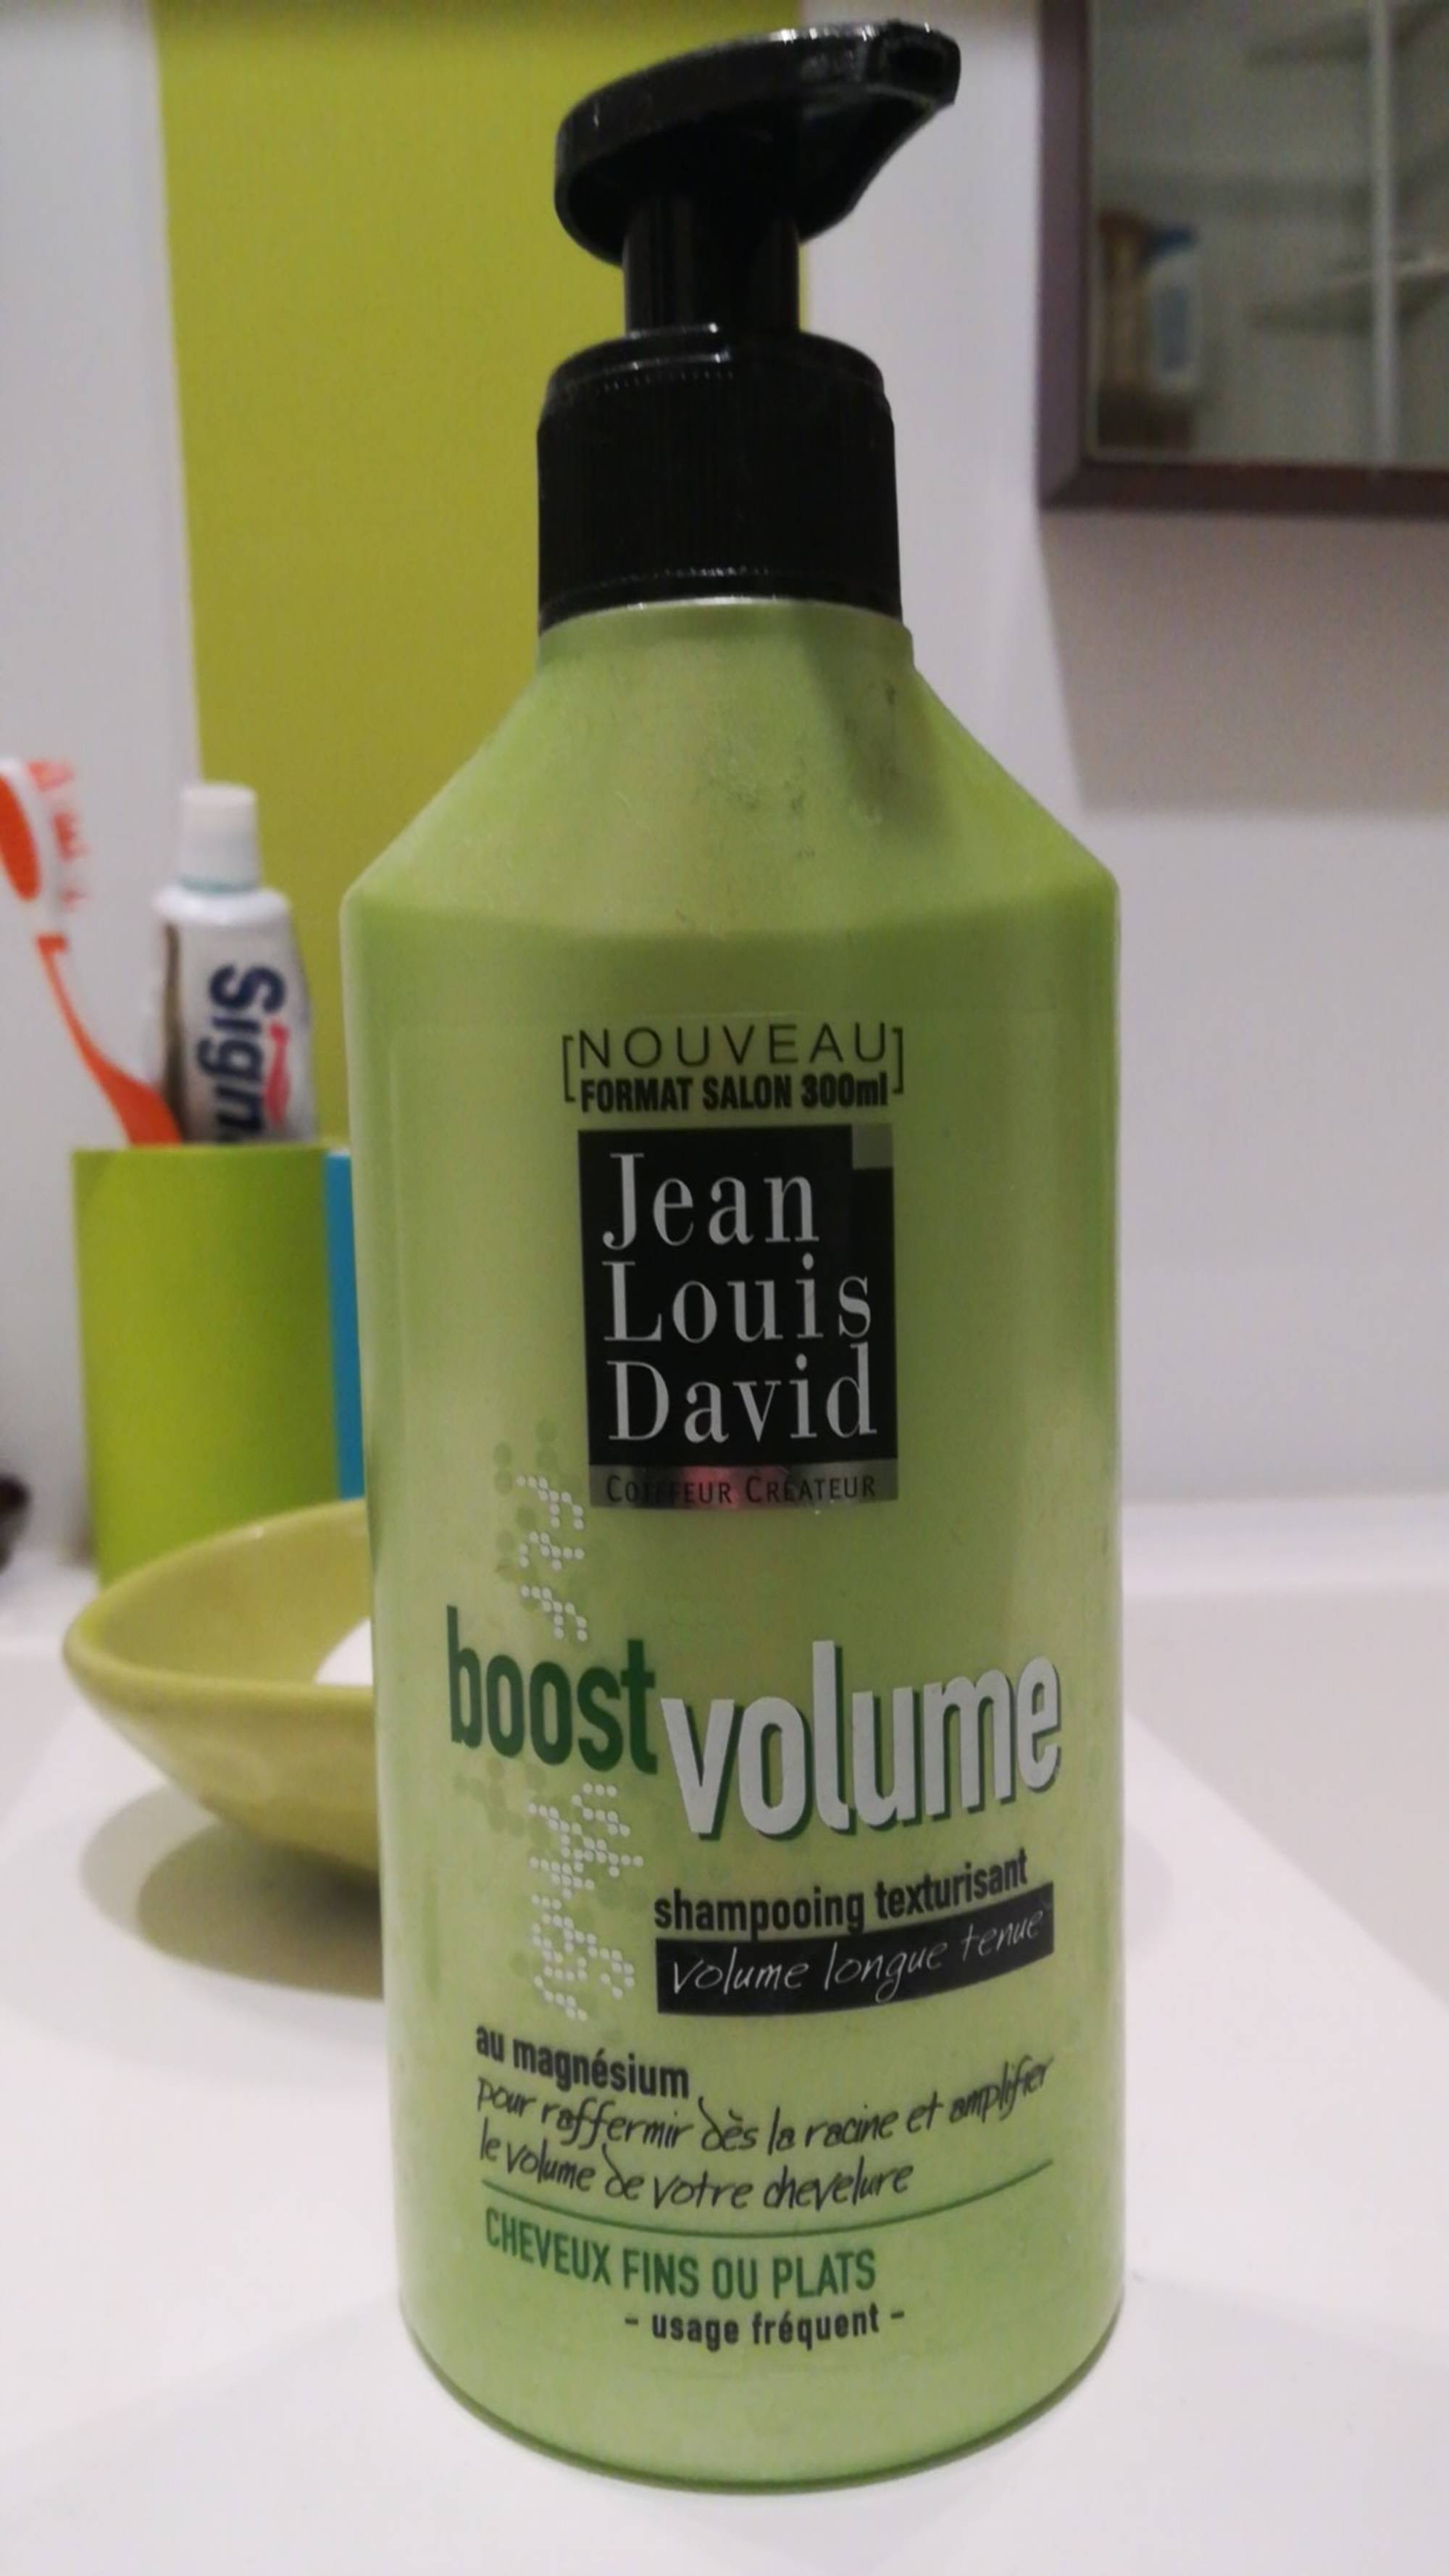 JEAN LOUIS DAVID - Boost volume - Shampooing texturisant